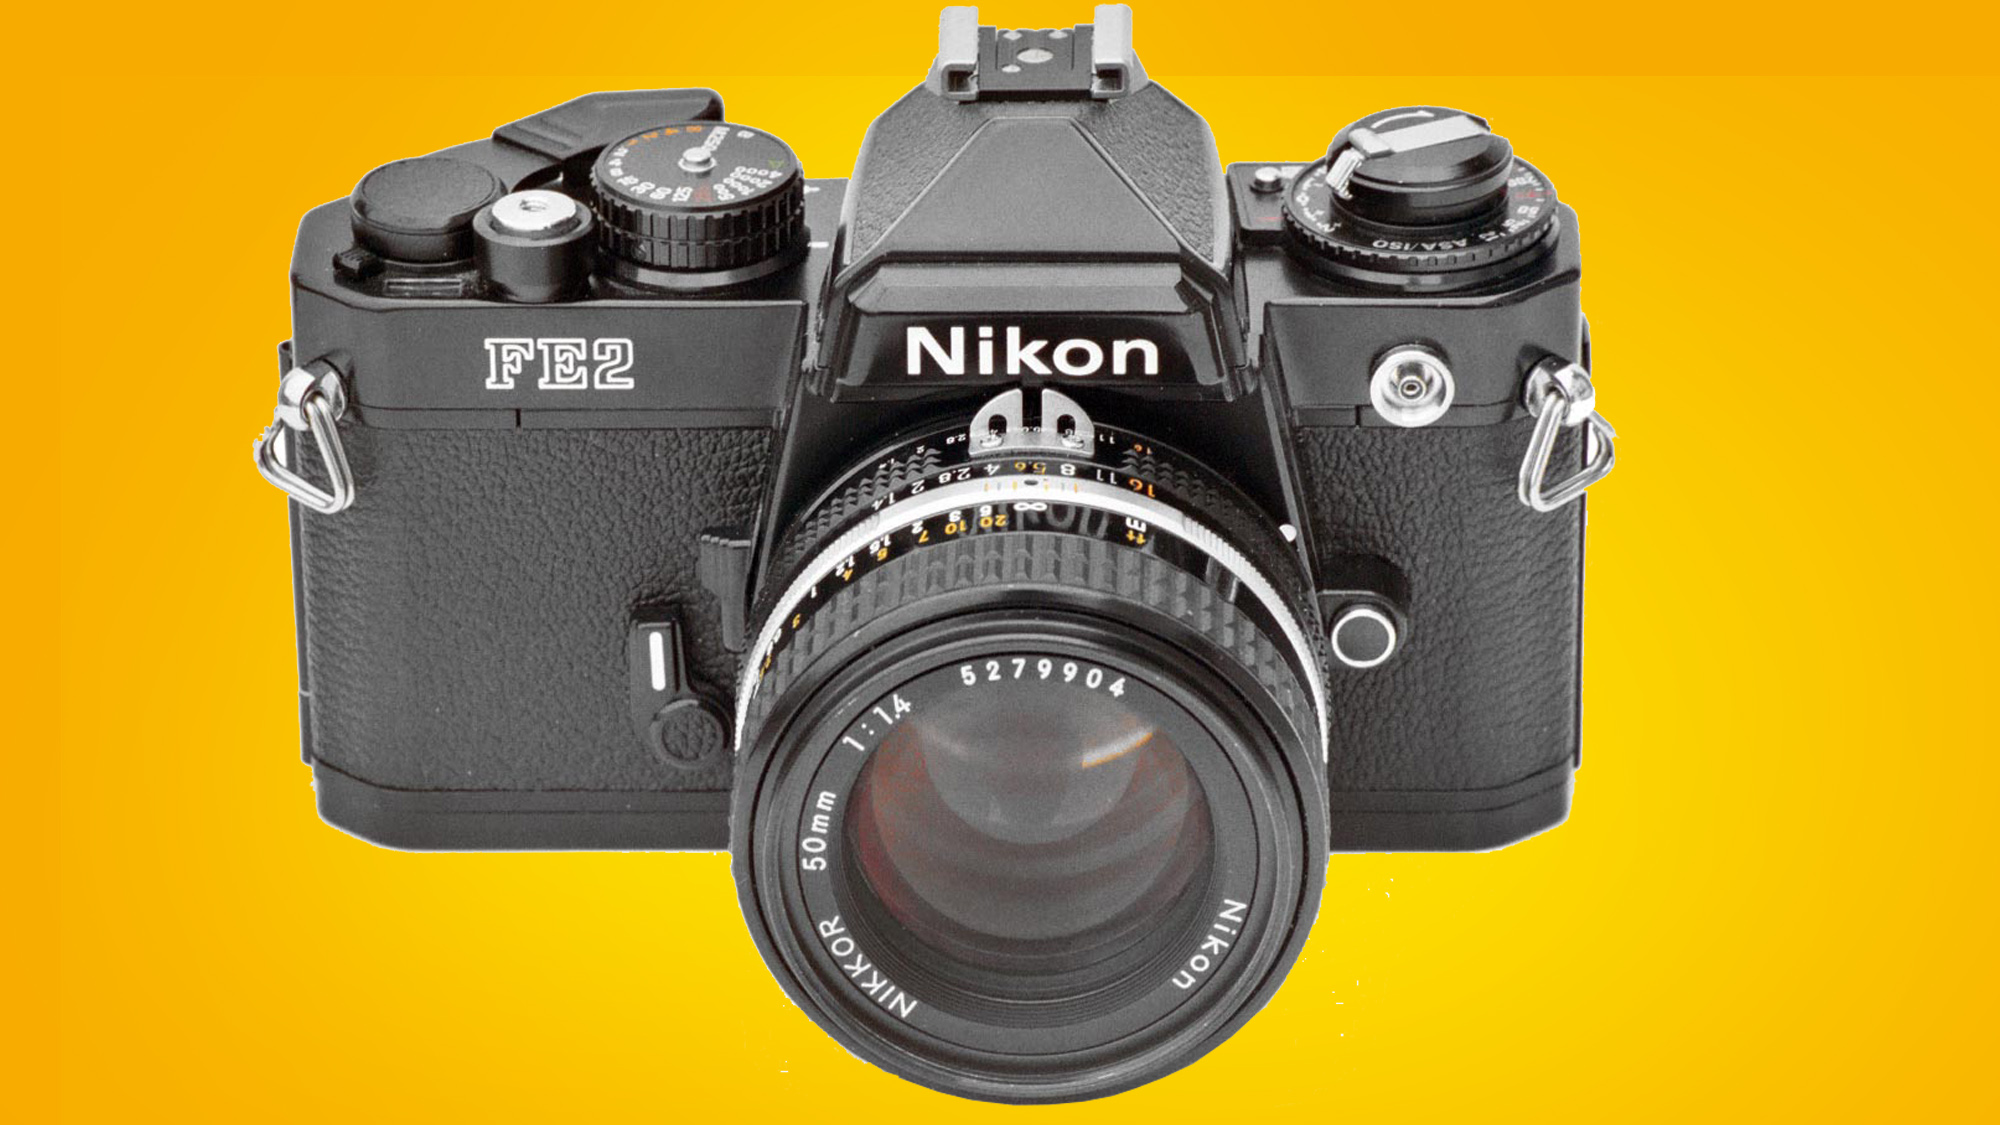 The NIkon FE2 camera on an orange background